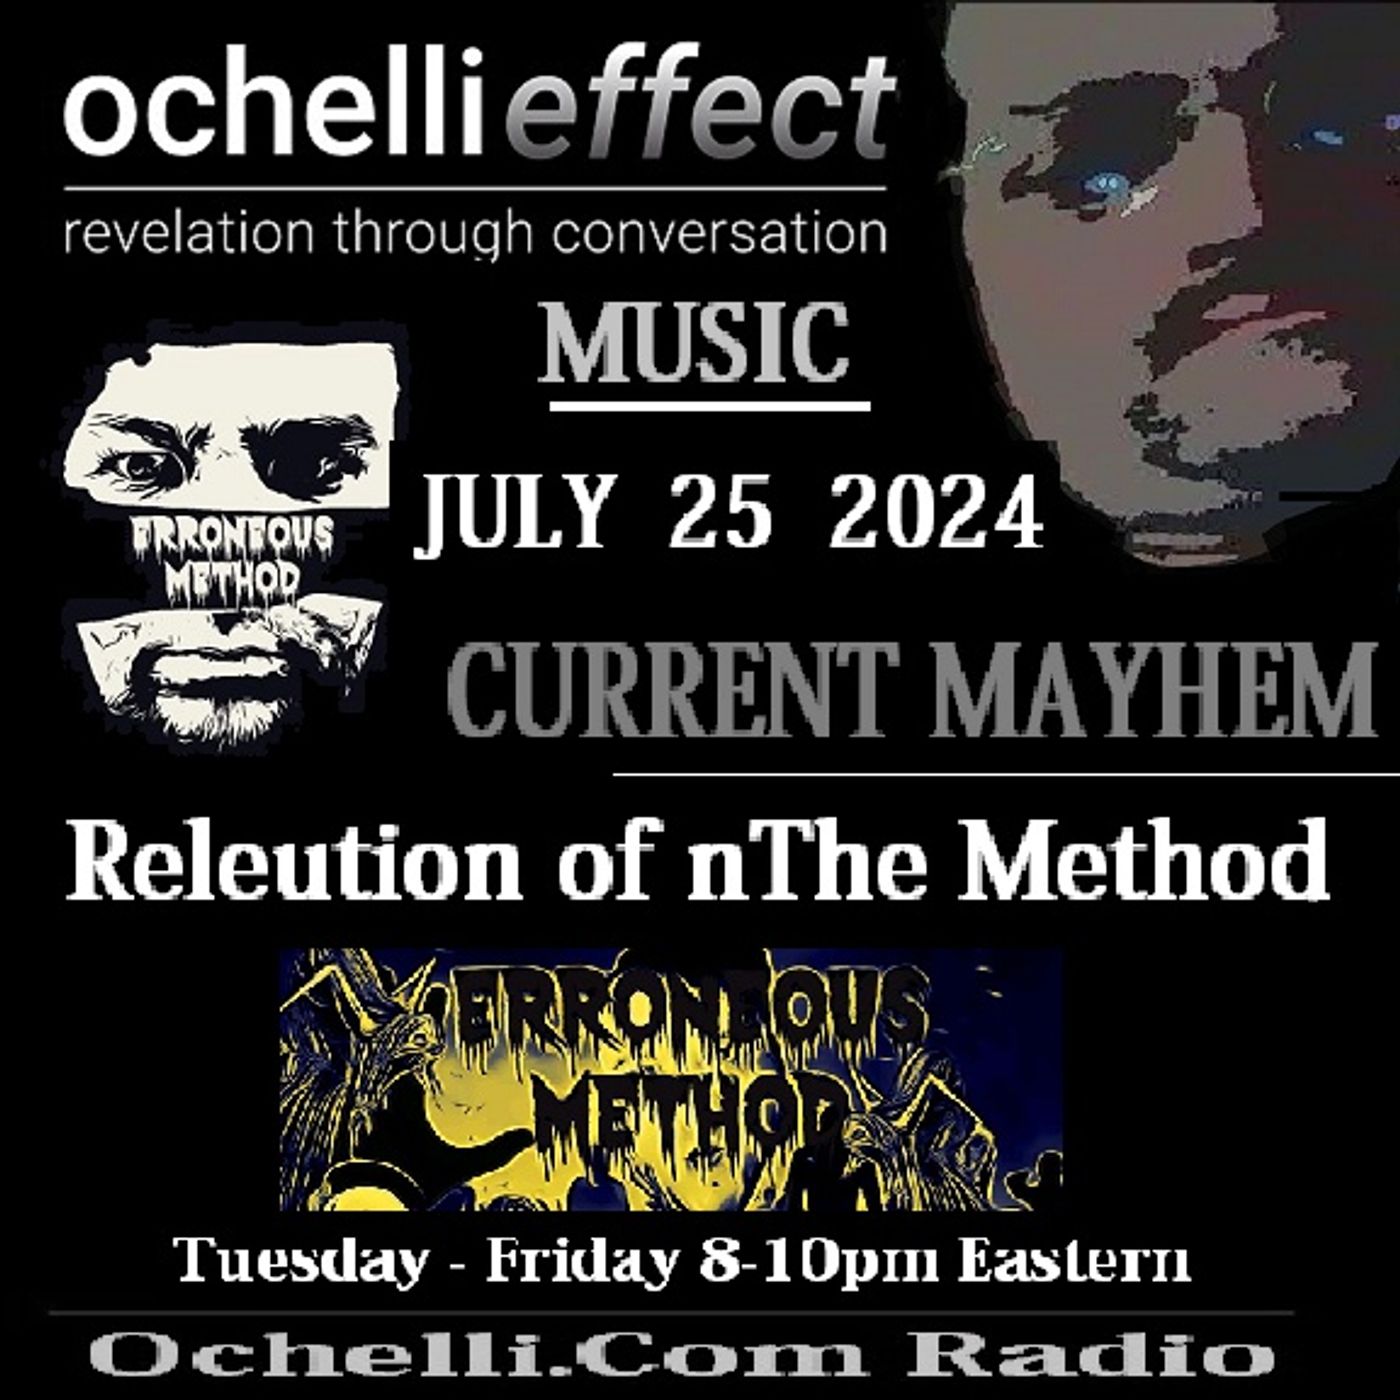 The Ochelli Effect 7-25-2024 Erroneous Method